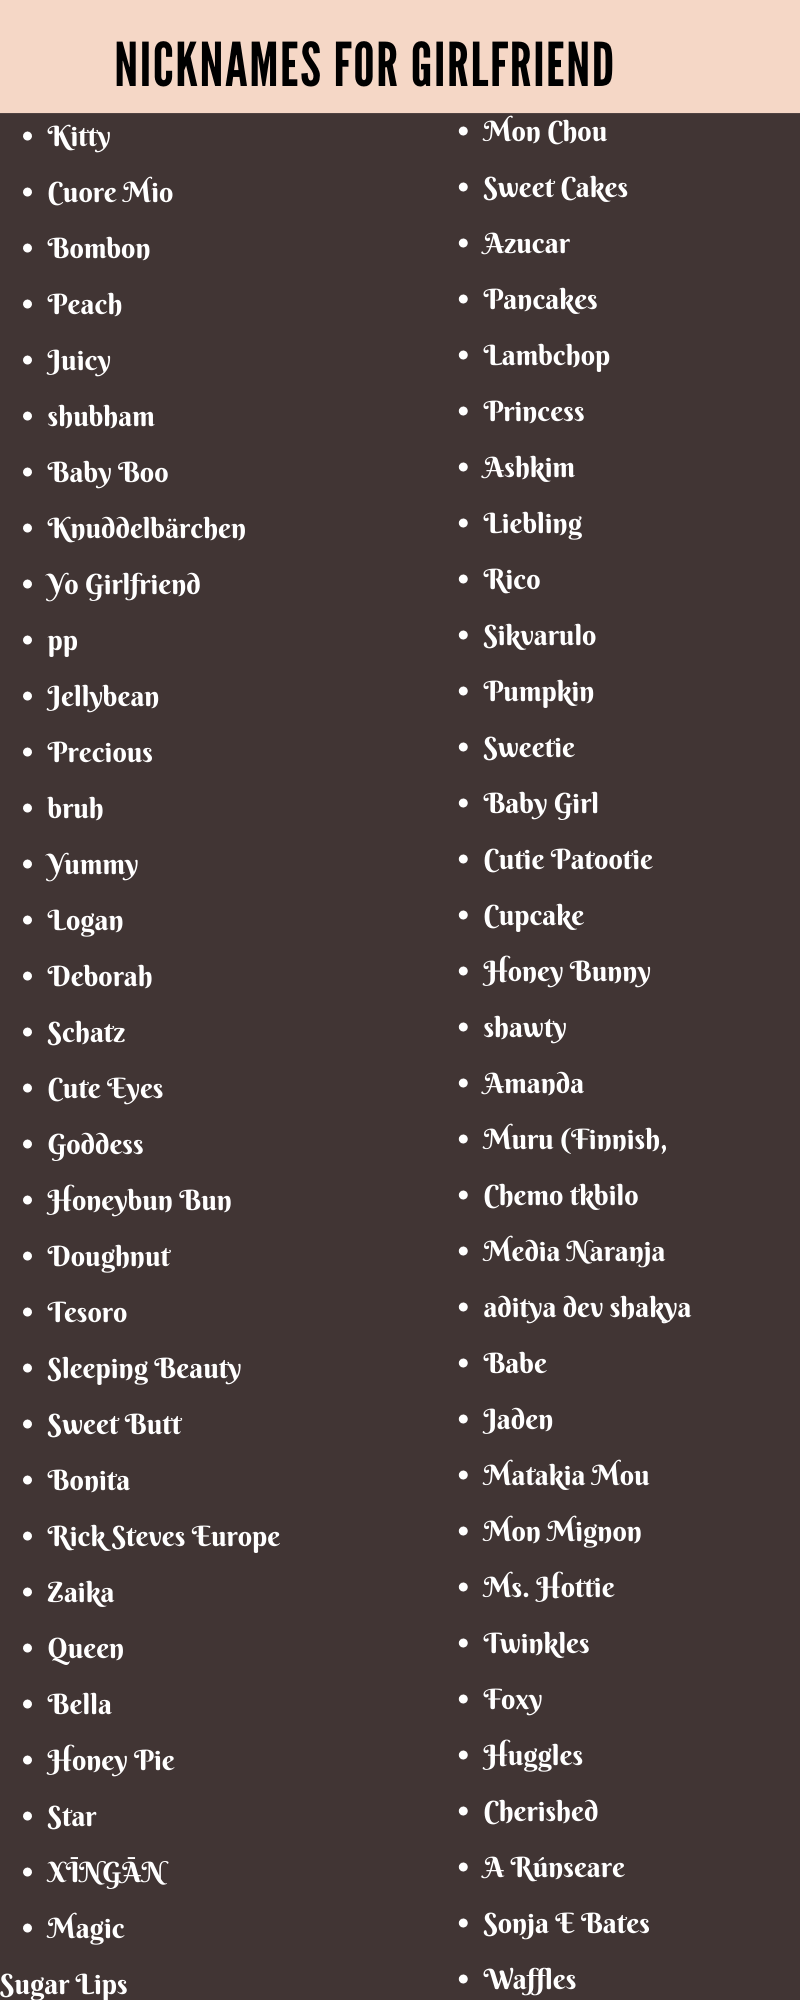 nicknames for girlfriend